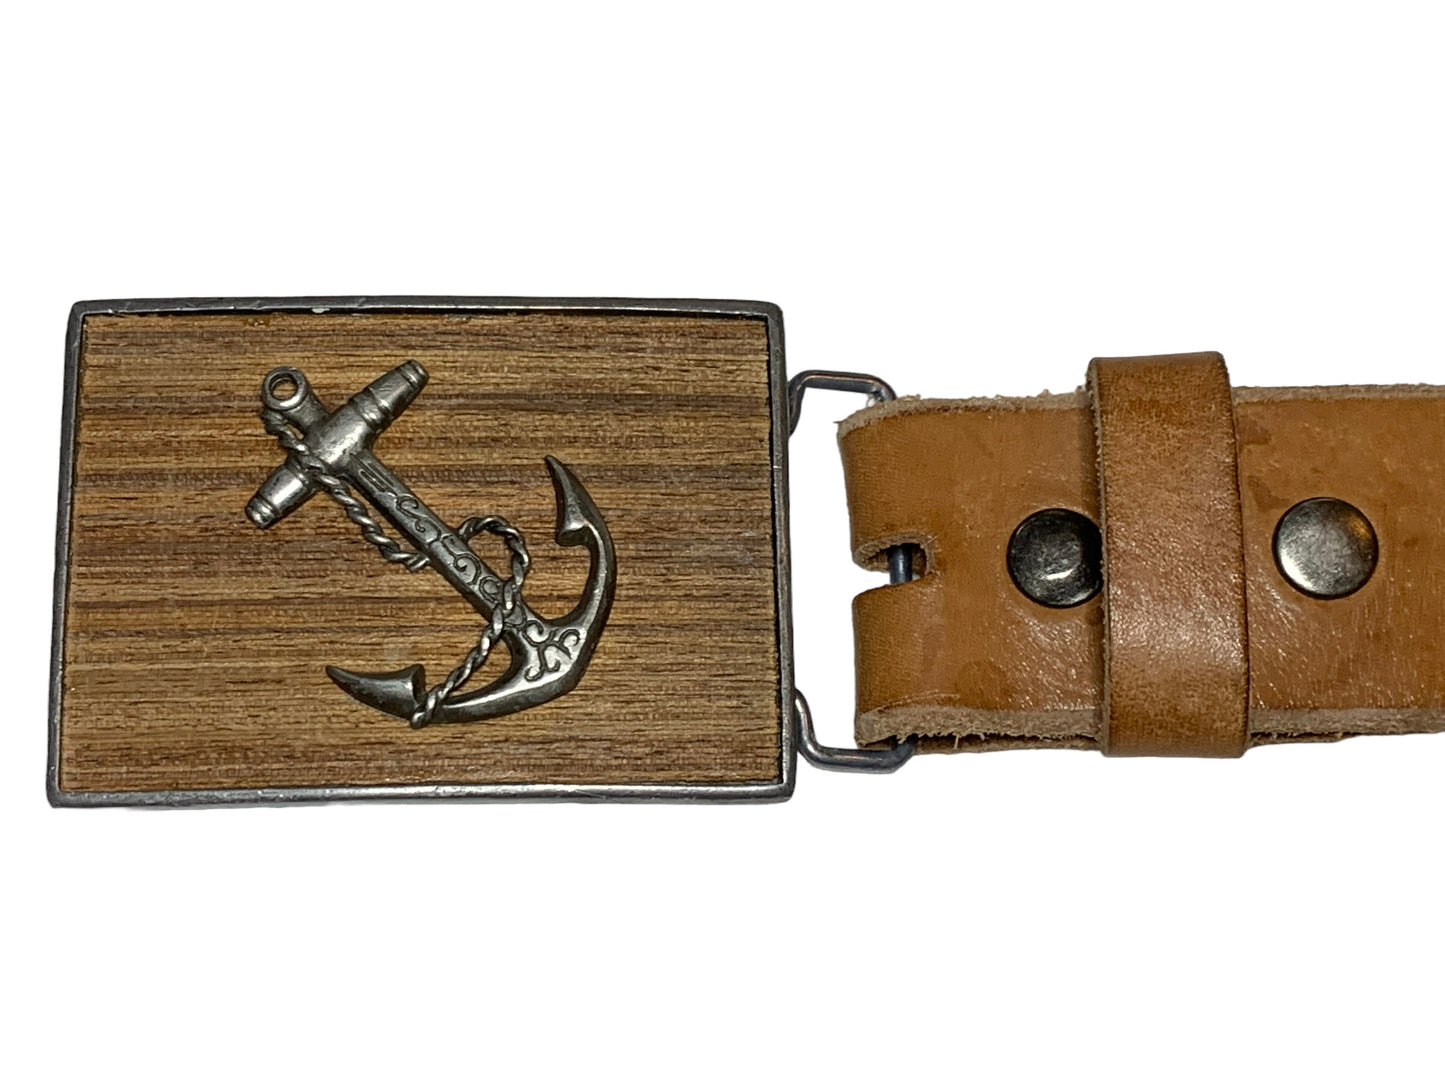 Gifting Vintage Belt Buckle Pewter and Wood Anchor Belt Buckle.